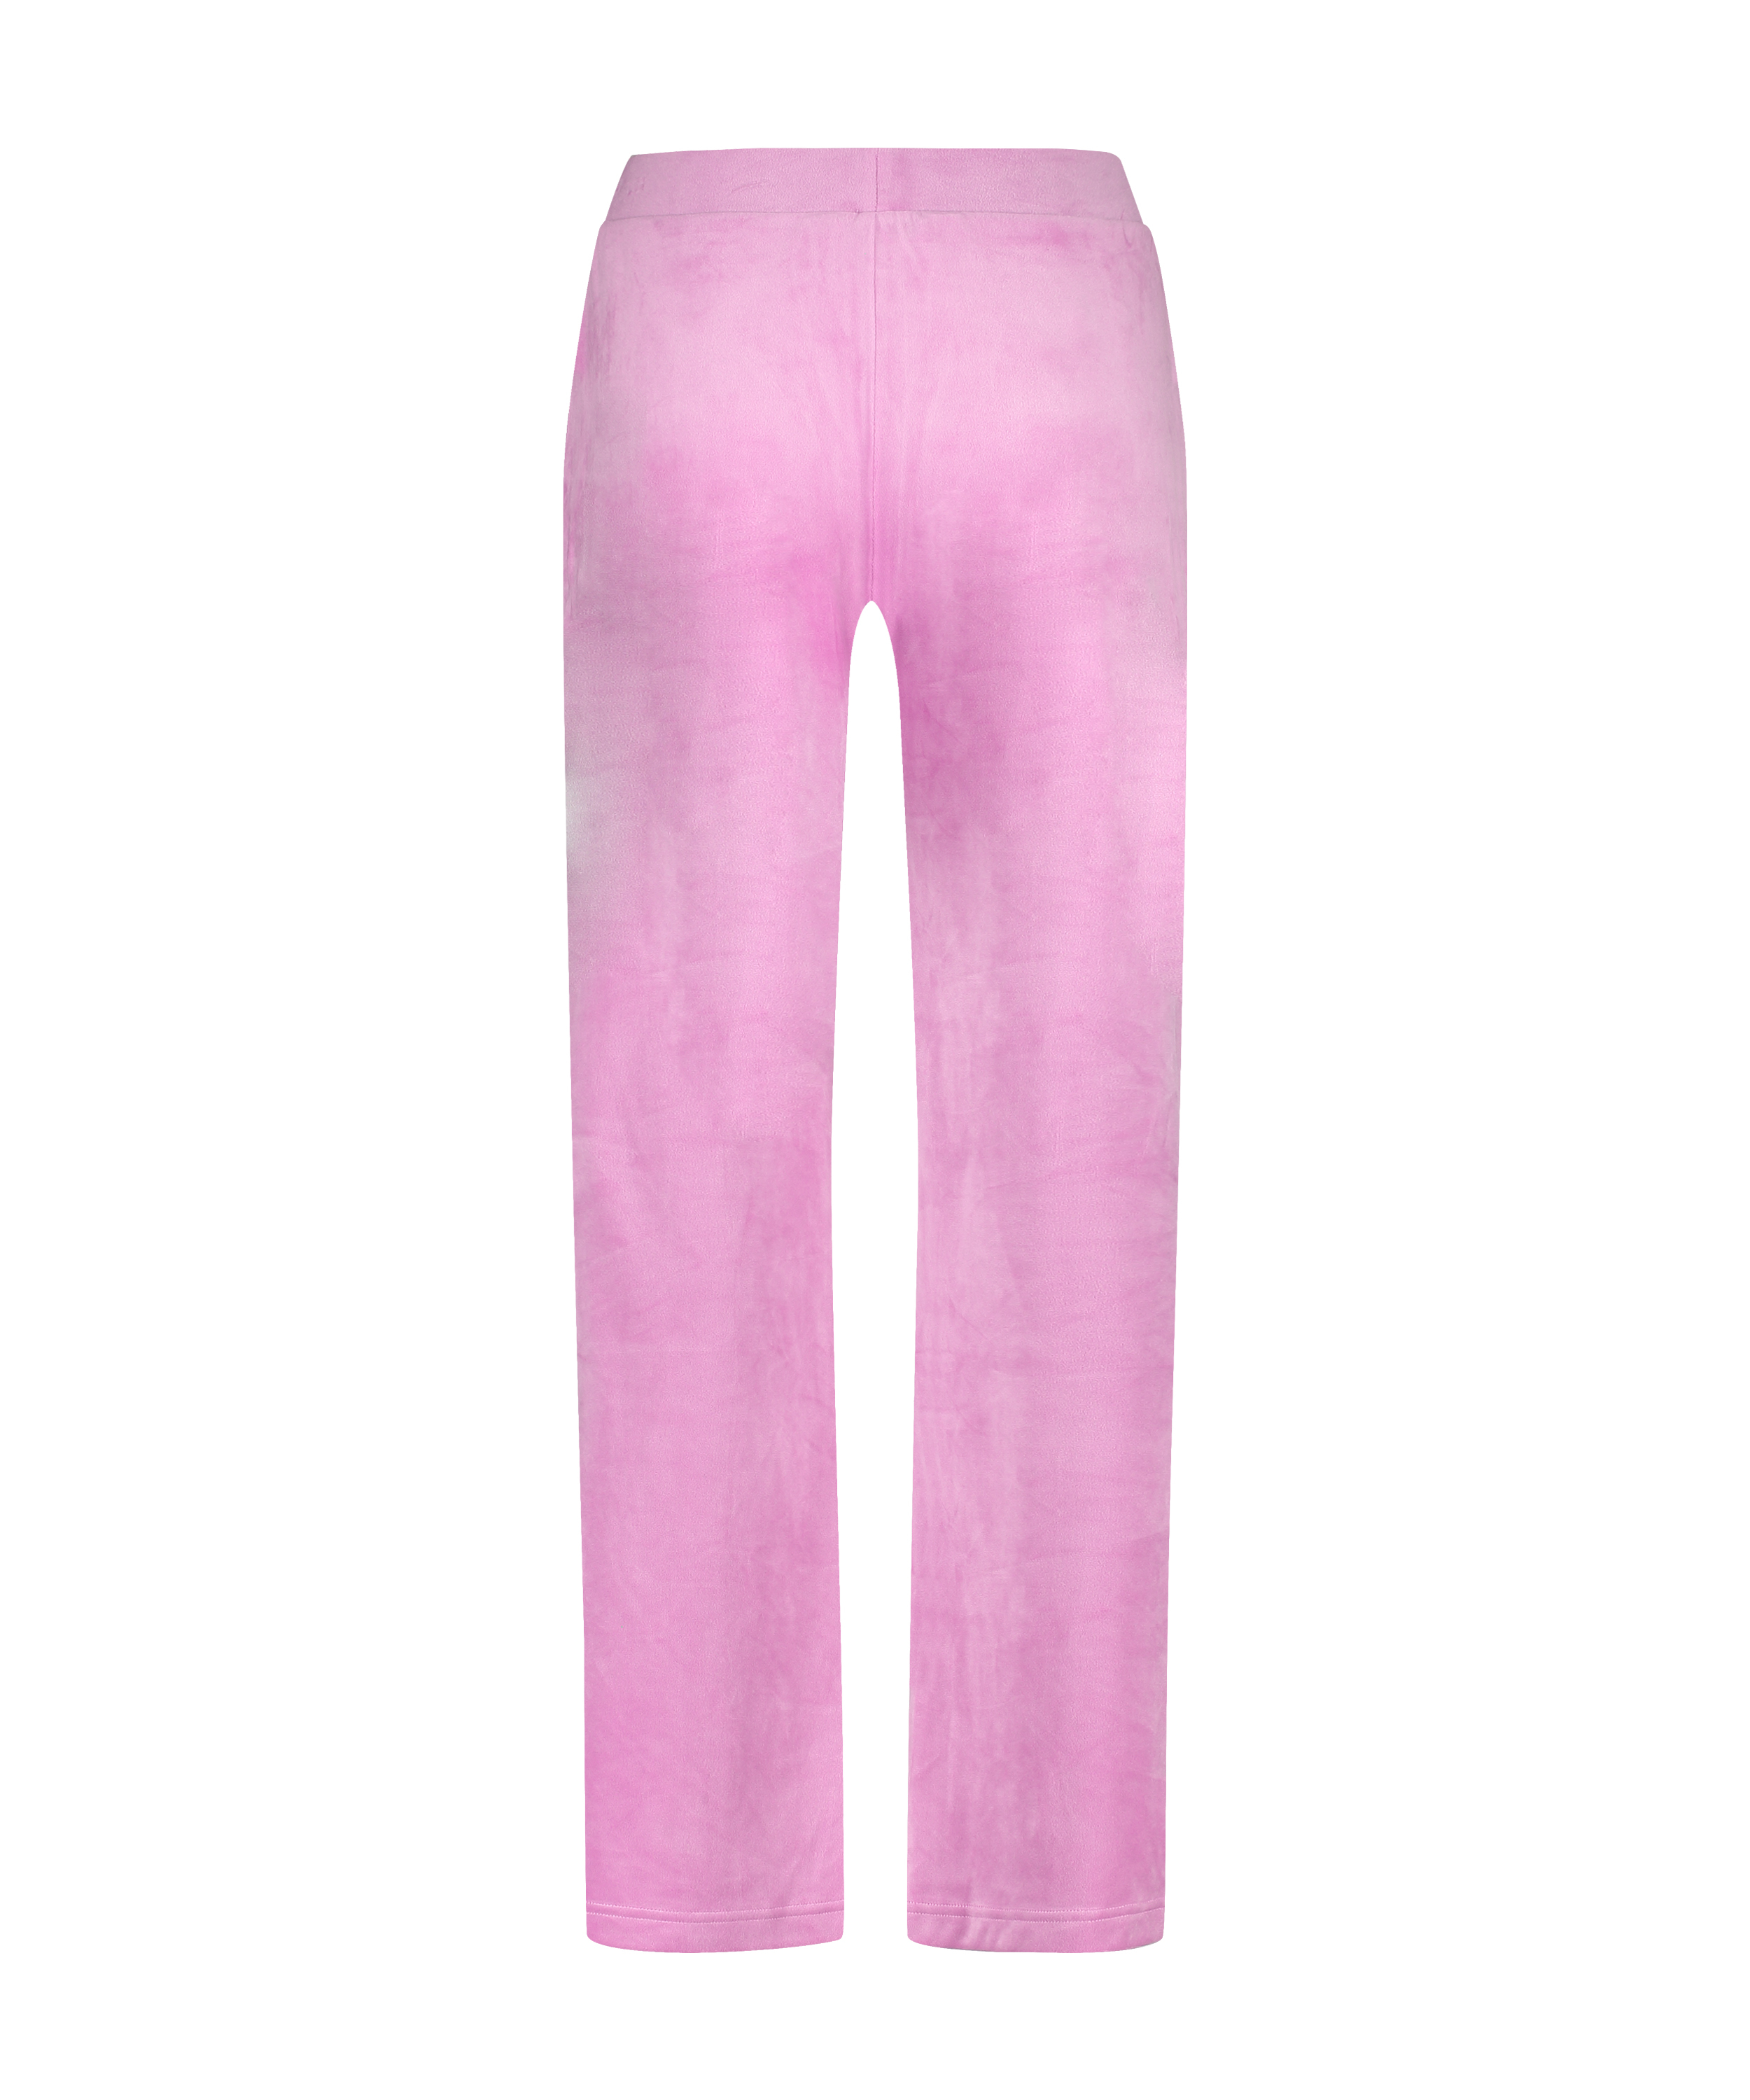 Velours Pyjama Pants, Pink, main